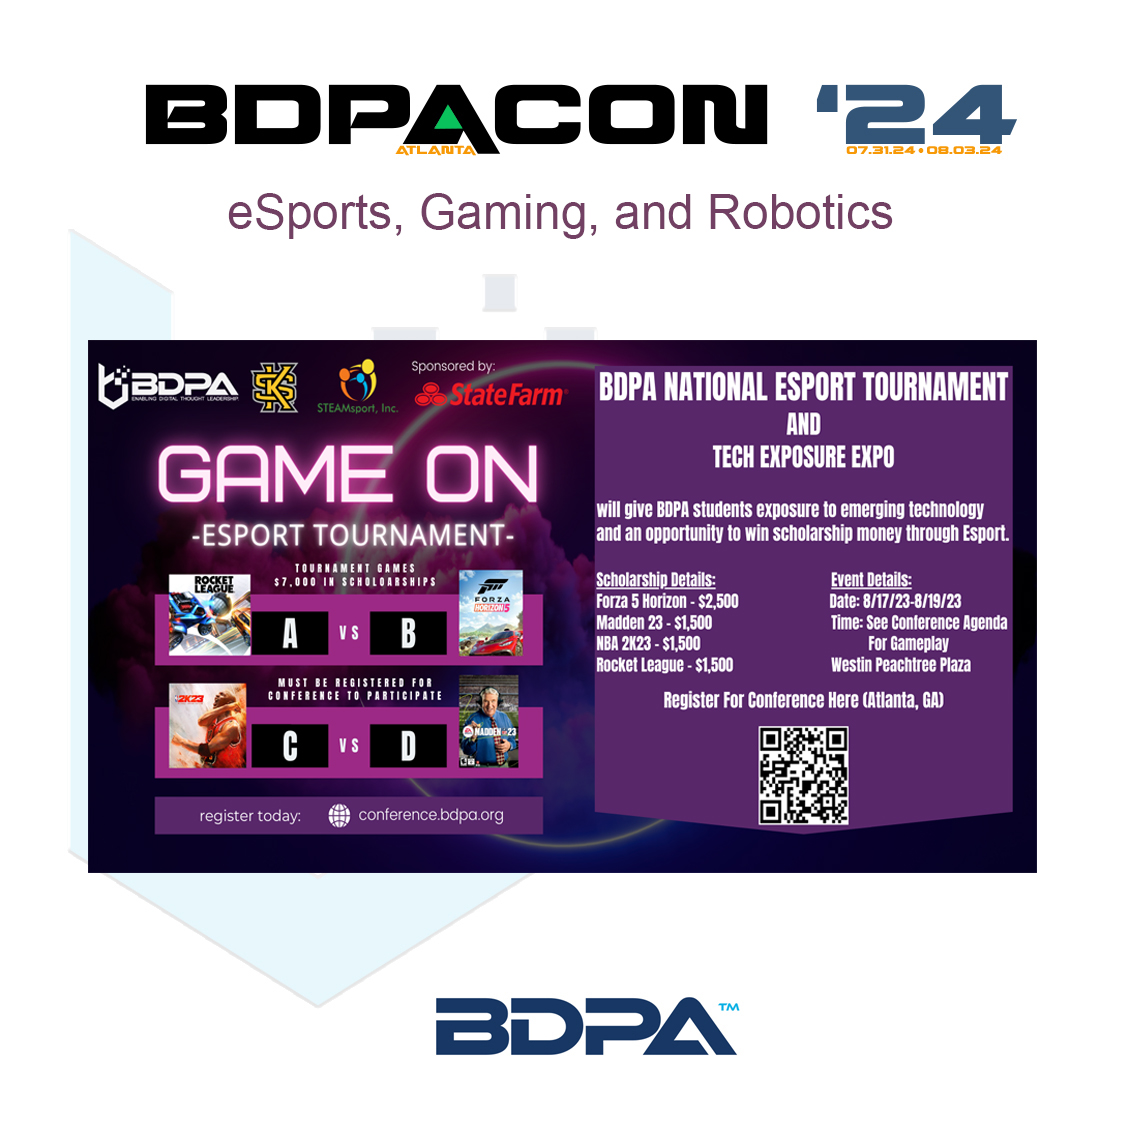 eSports, Gaming, and Robotics